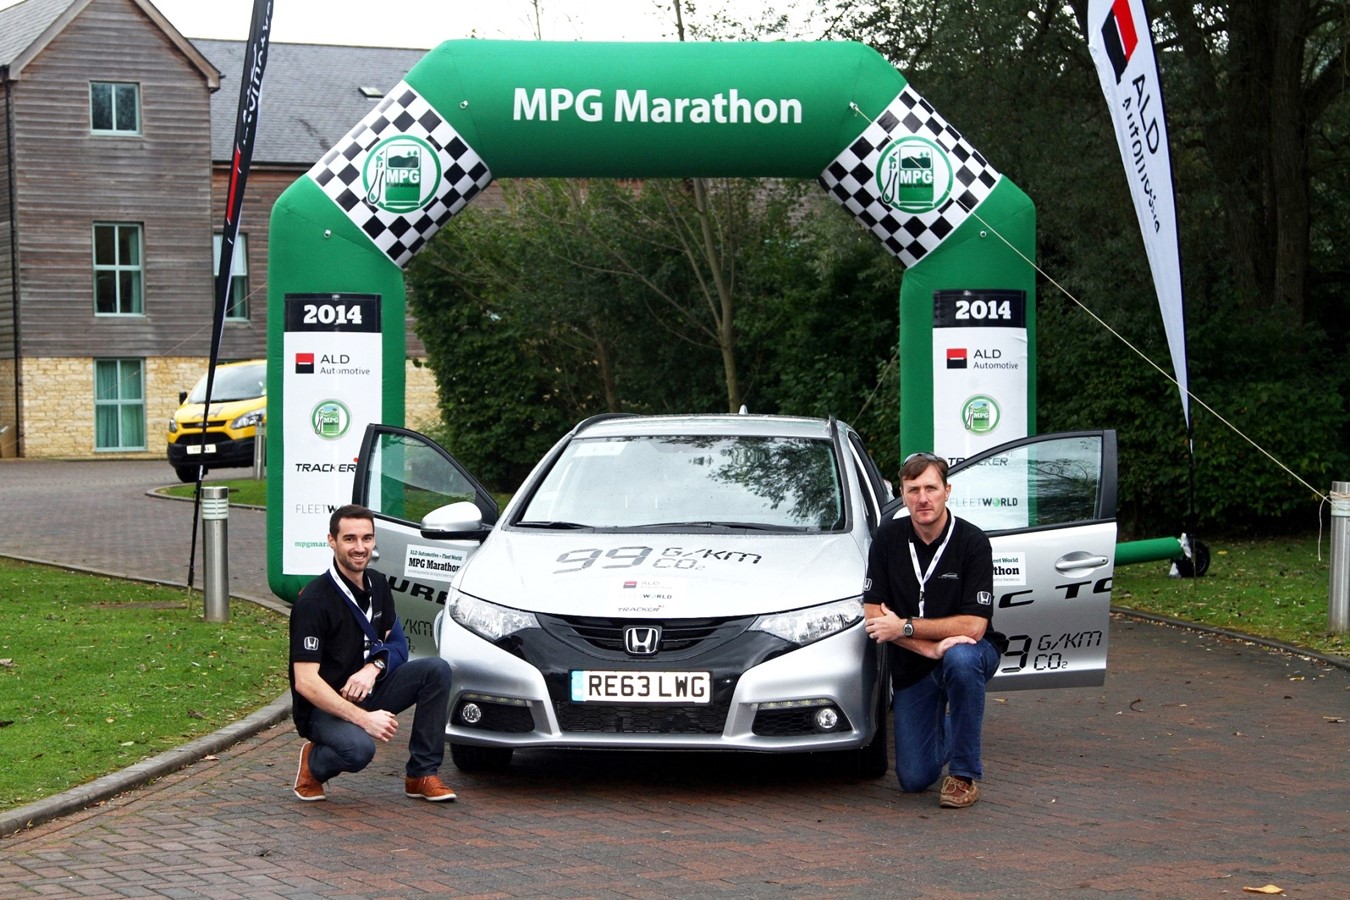 Super-efficient Civic Tourer powers Honda (UK) to ‘MPG Marathon’ title